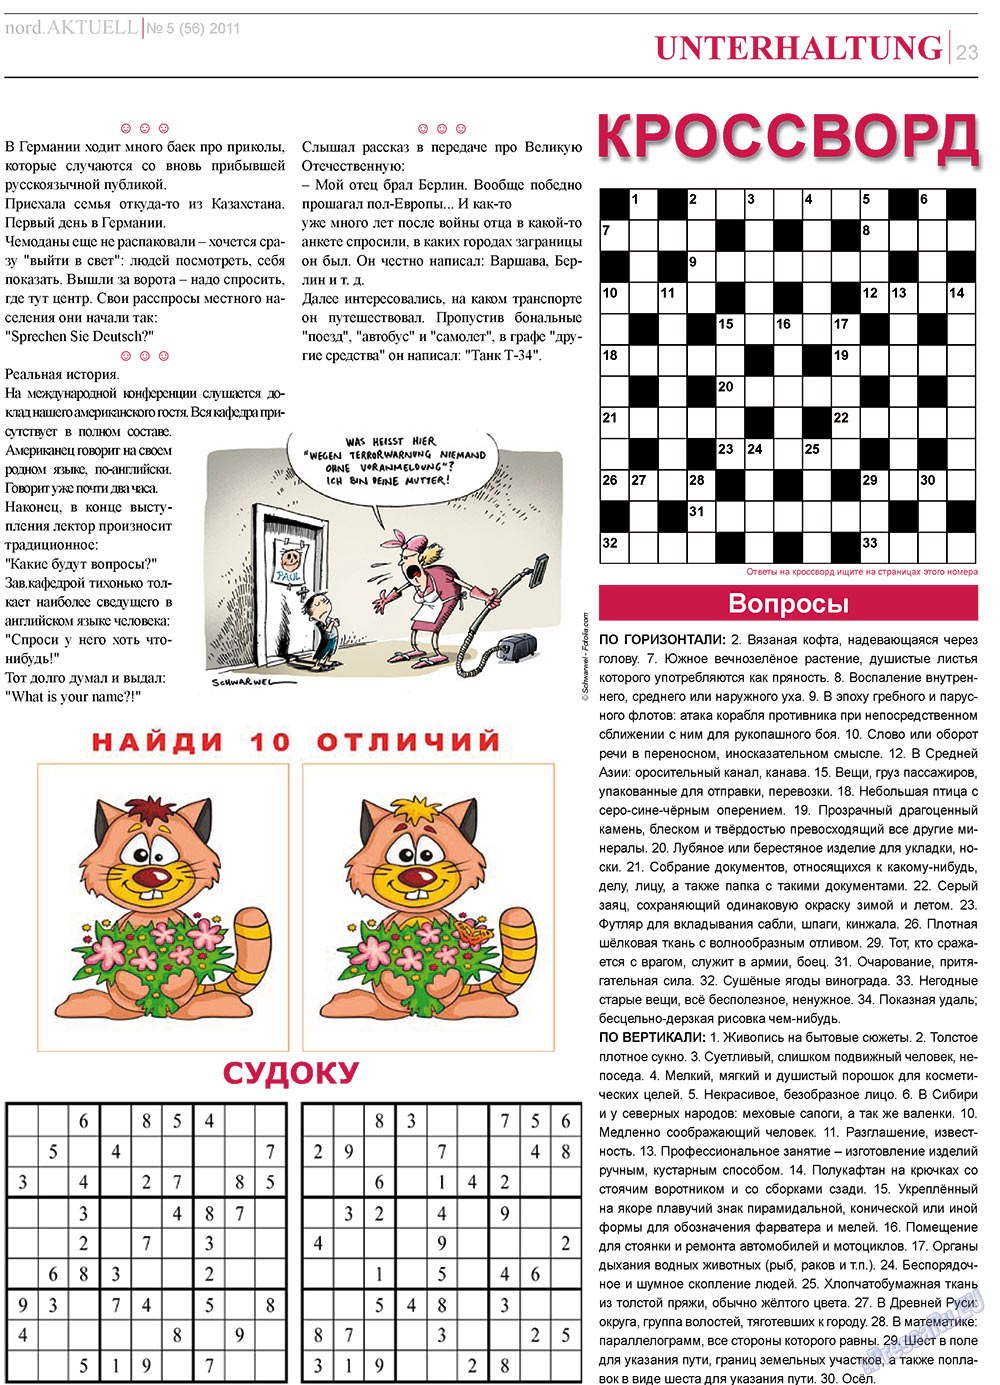 nord.Aktuell, газета. 2011 №5 стр.23